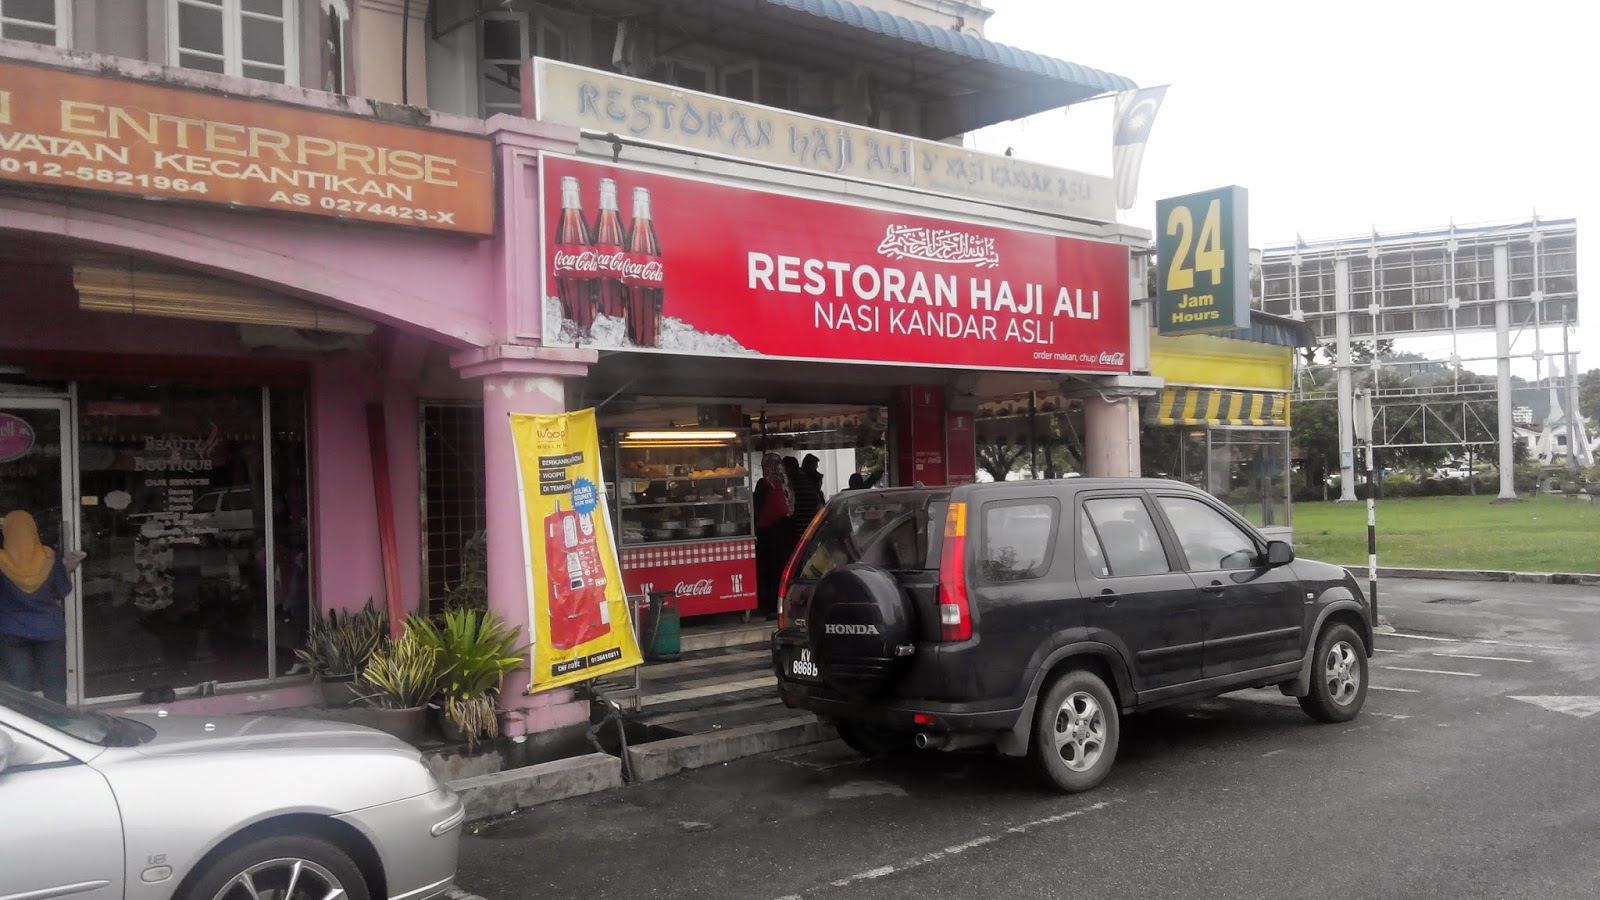 Restaurant Haji Ali Nasi Kandar Asli